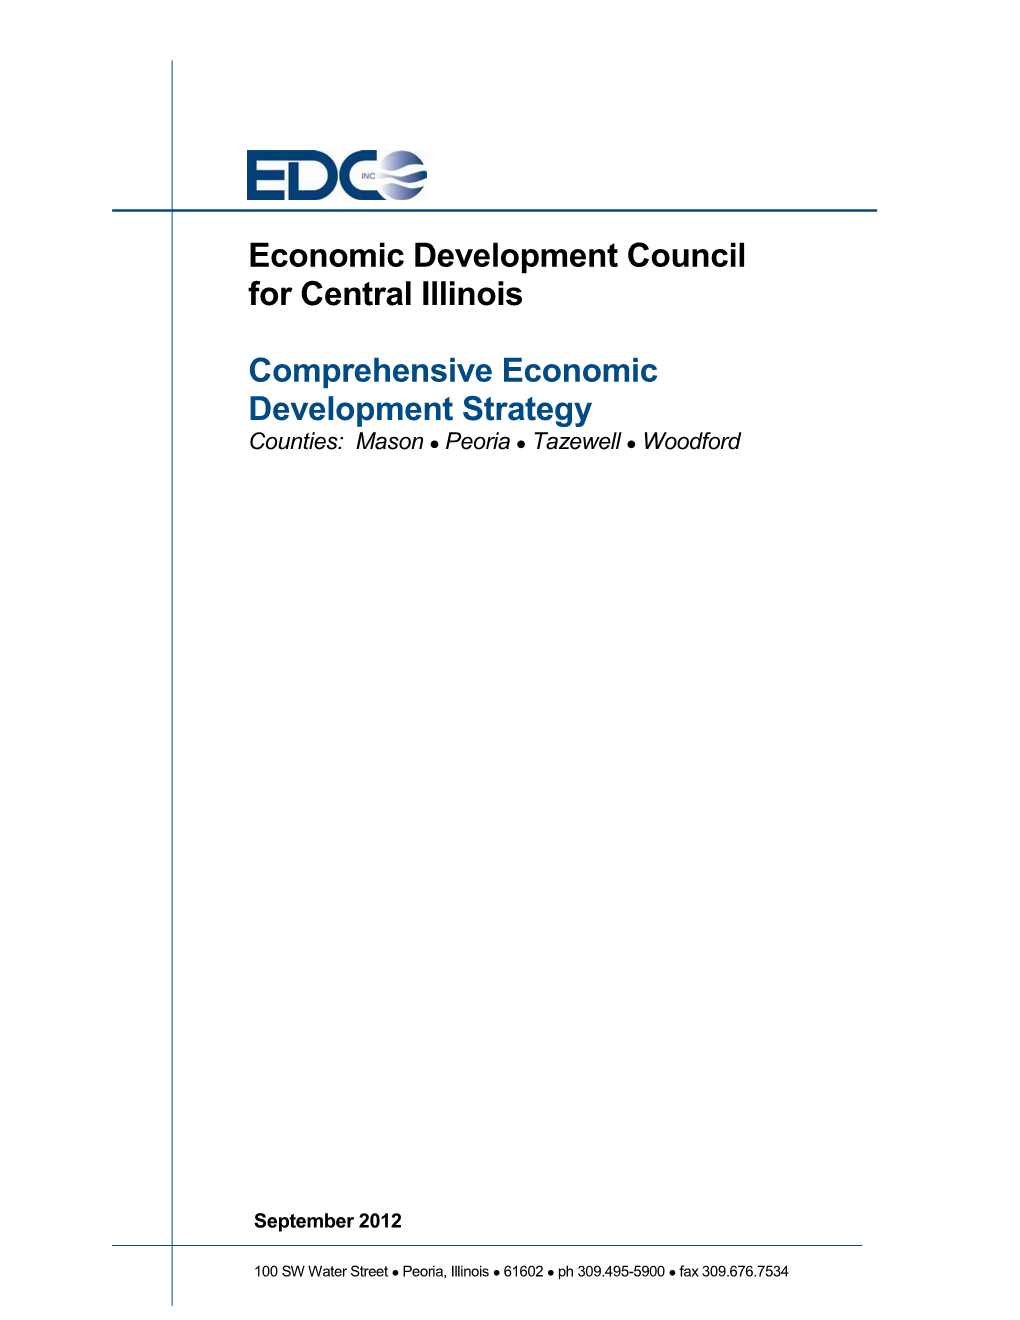 Comprehensive Economic Development Strategy Counties: Mason  Peoria  Tazewell  Woodford